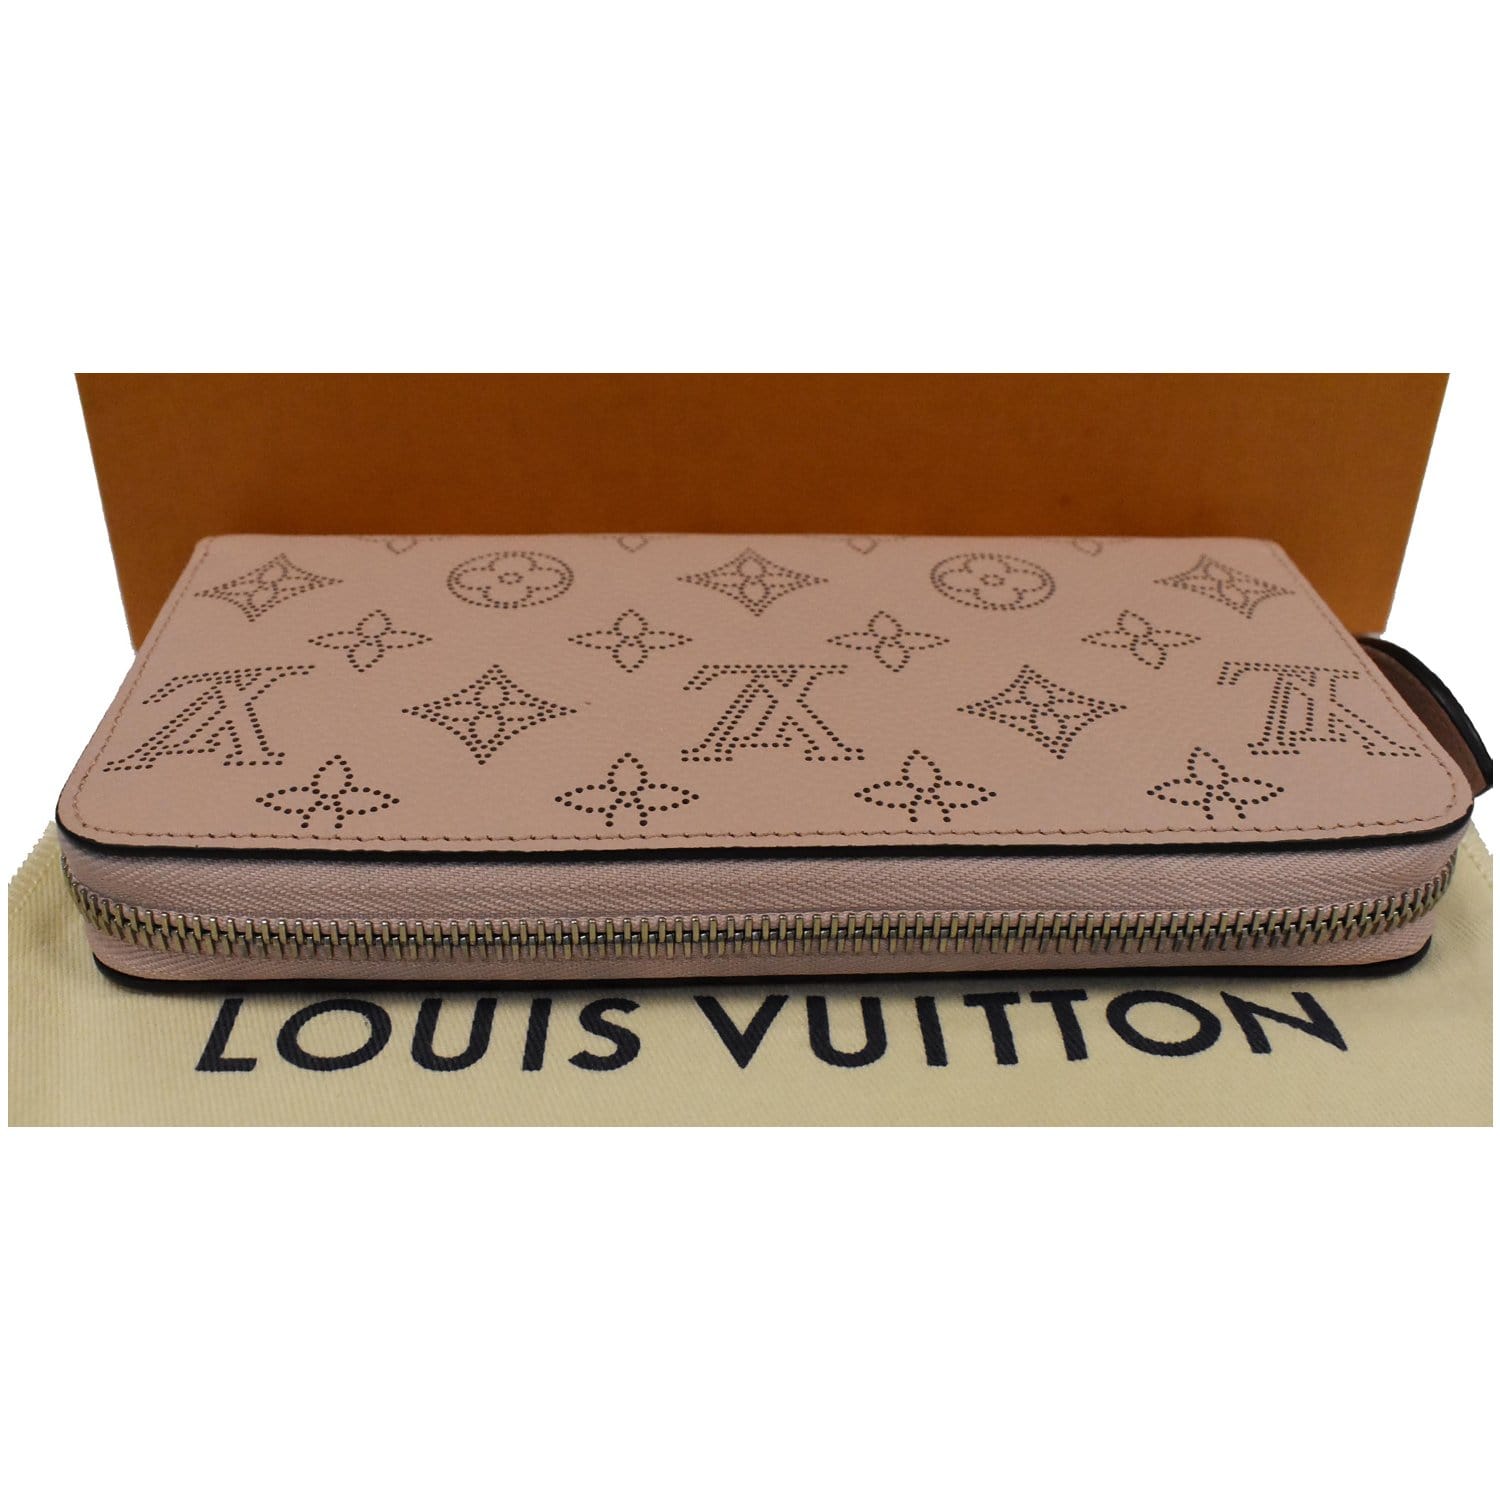 Authenticated Used LOUIS VUITTON Louis Vuitton Zippy Mahina